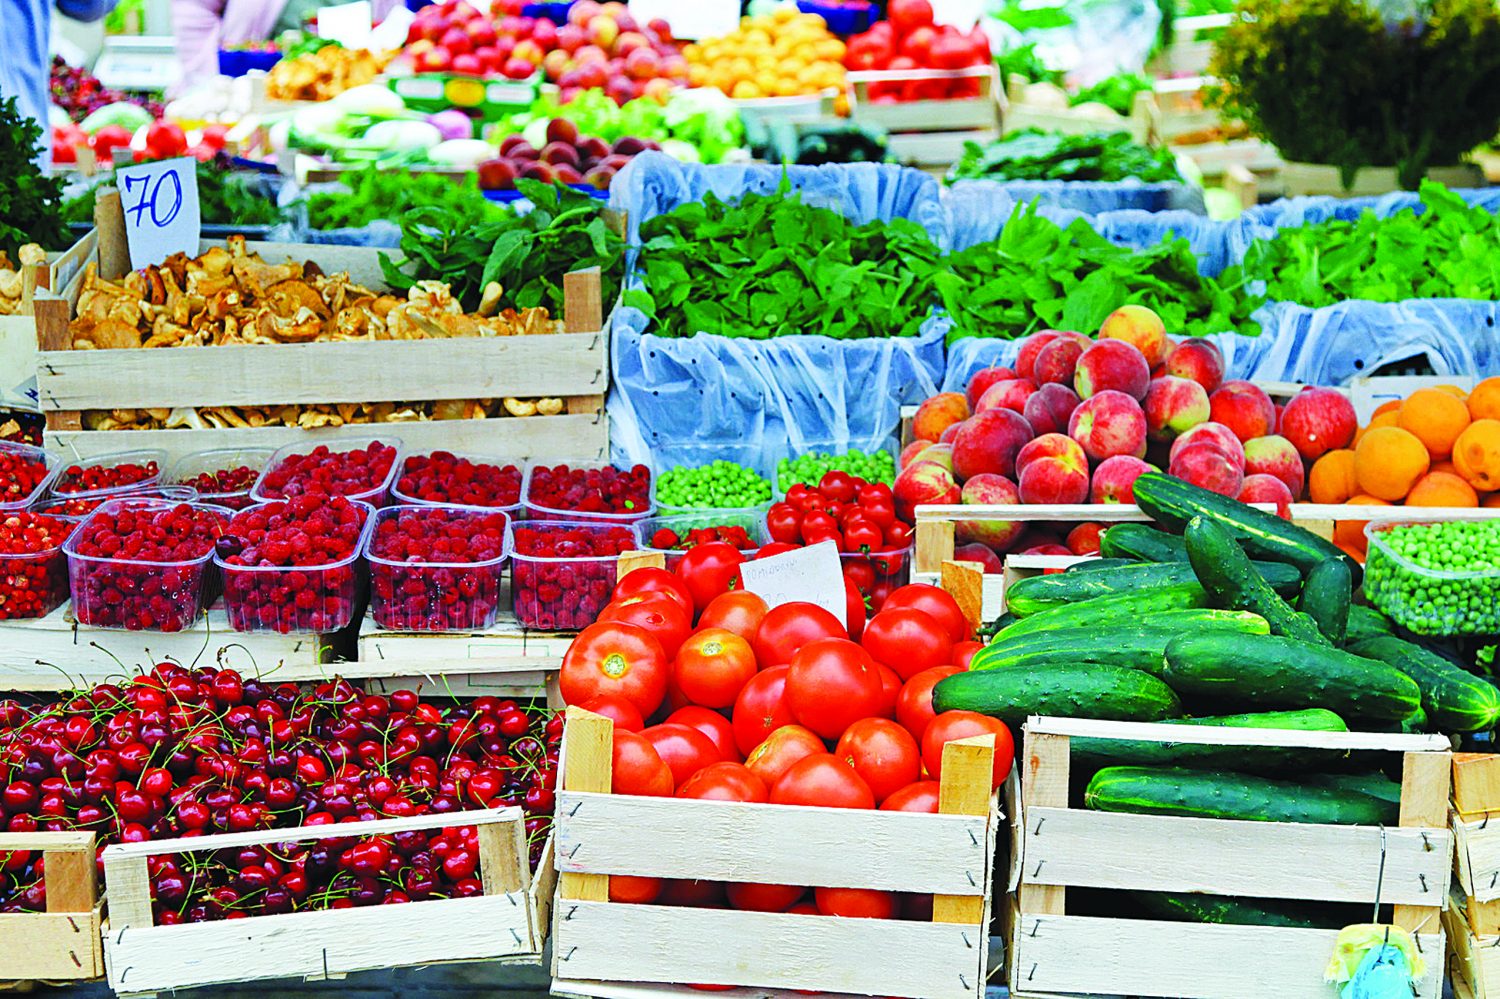 Farmers Market customer appreciation day set for Saturday